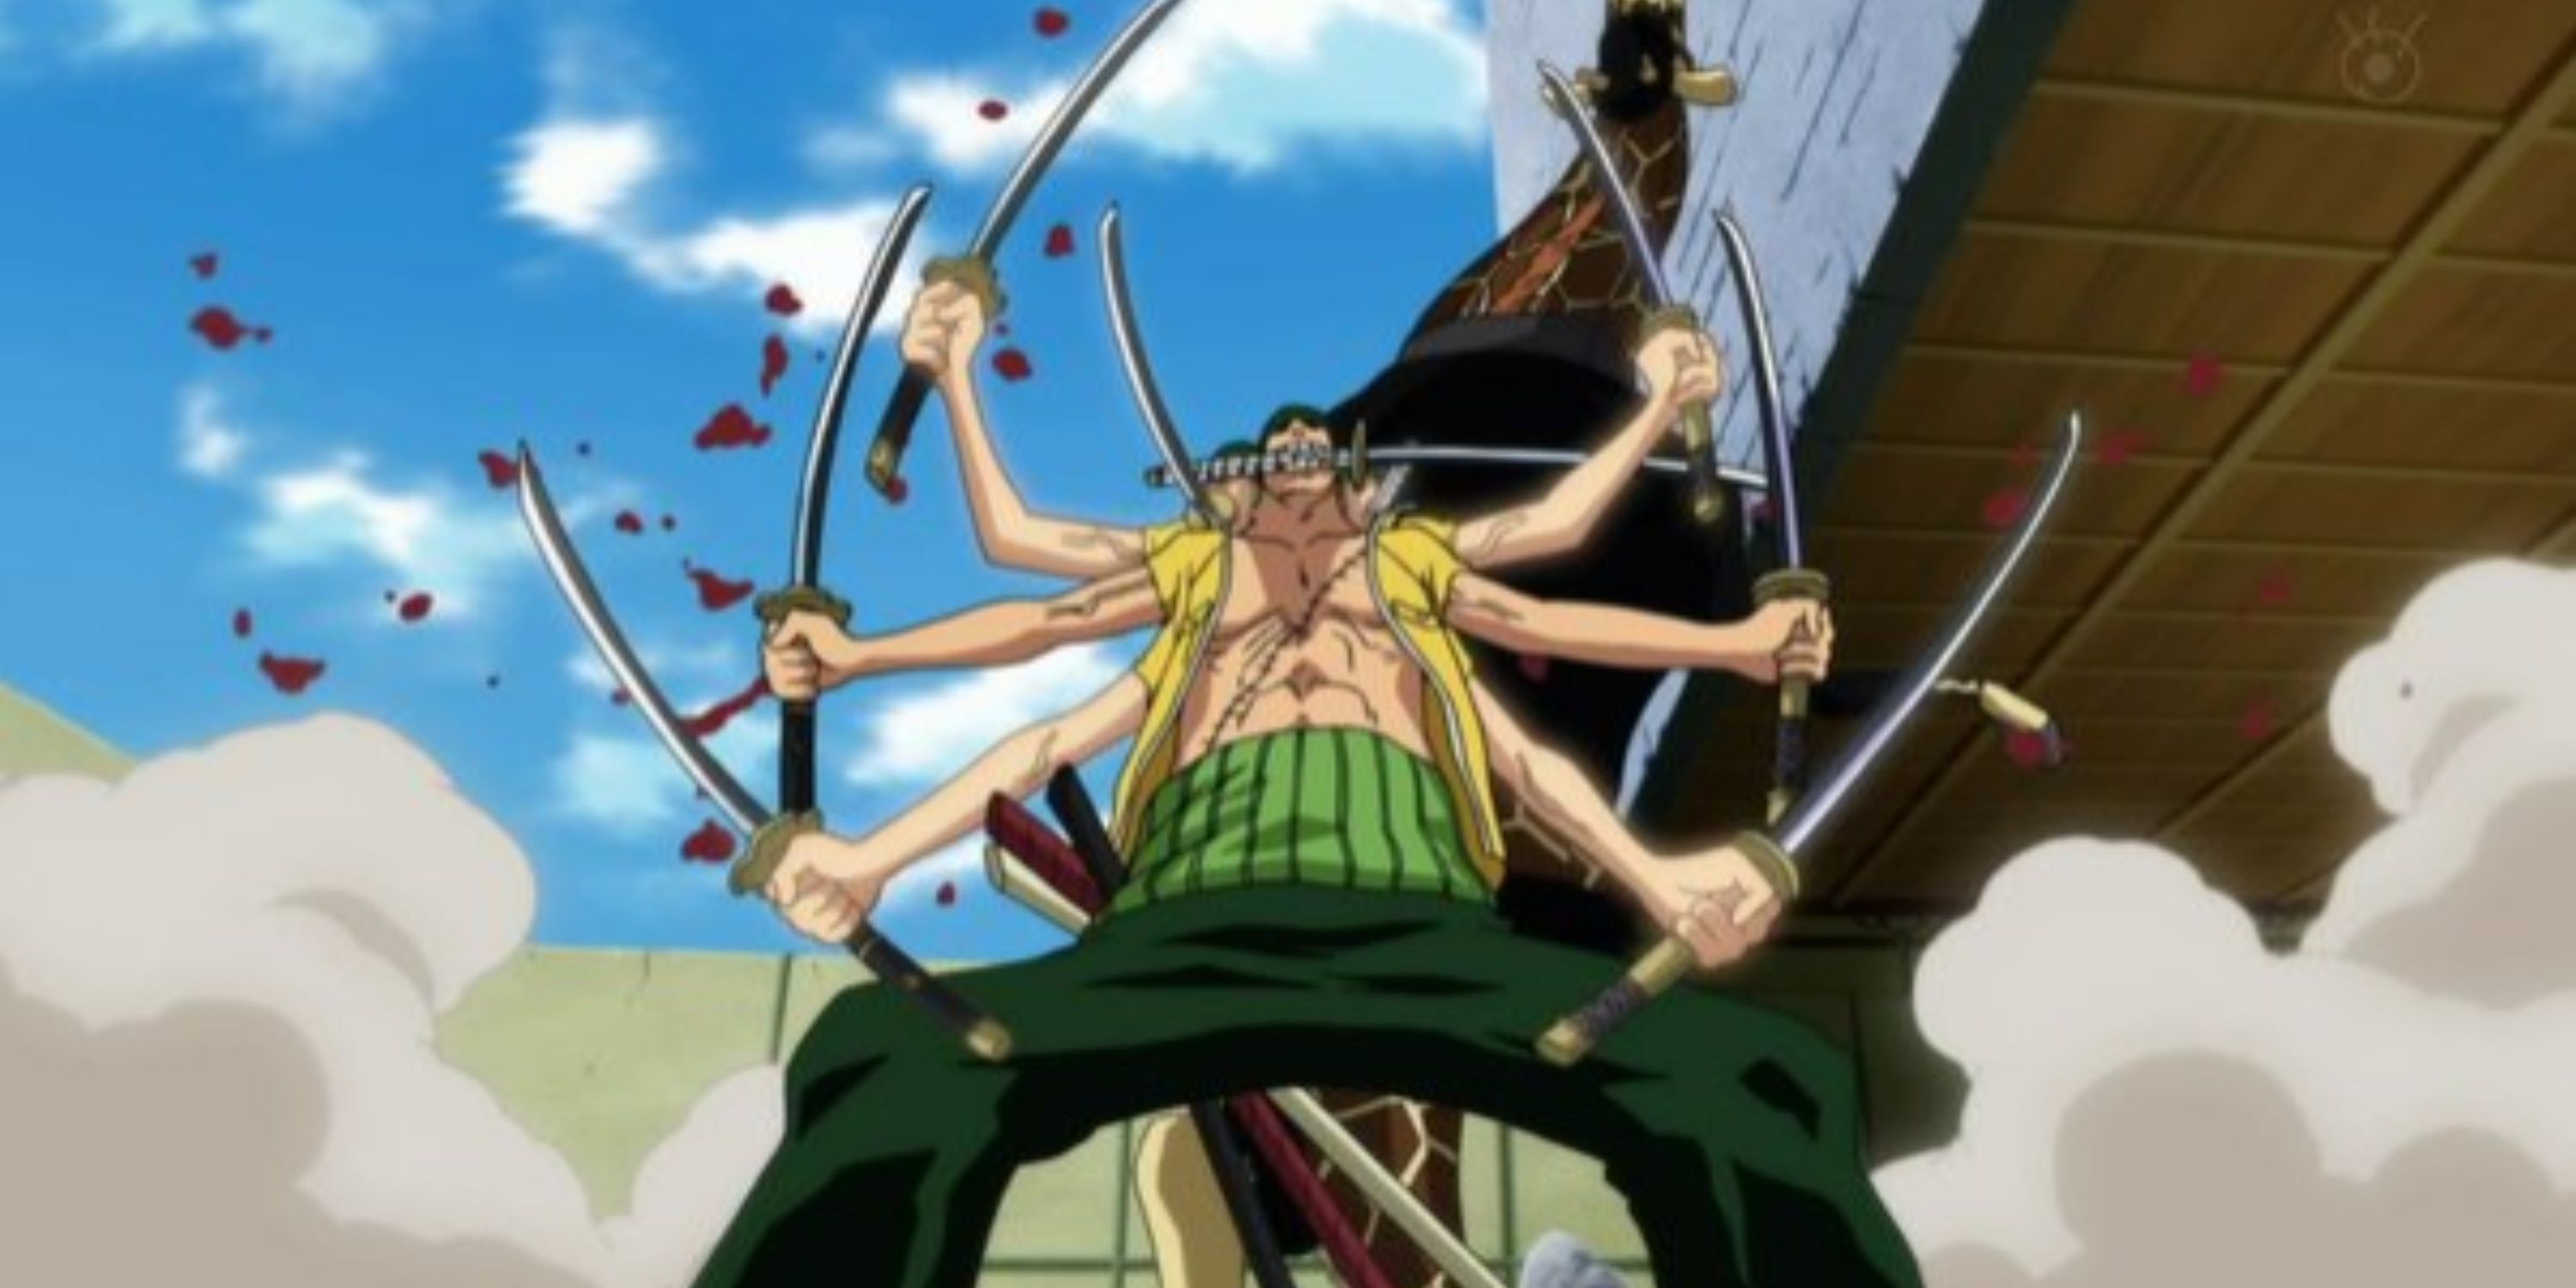 Roronoa Zoro using his Asura technique to defeat Kaku of CP9 during One Piece's Enies Lobby arc